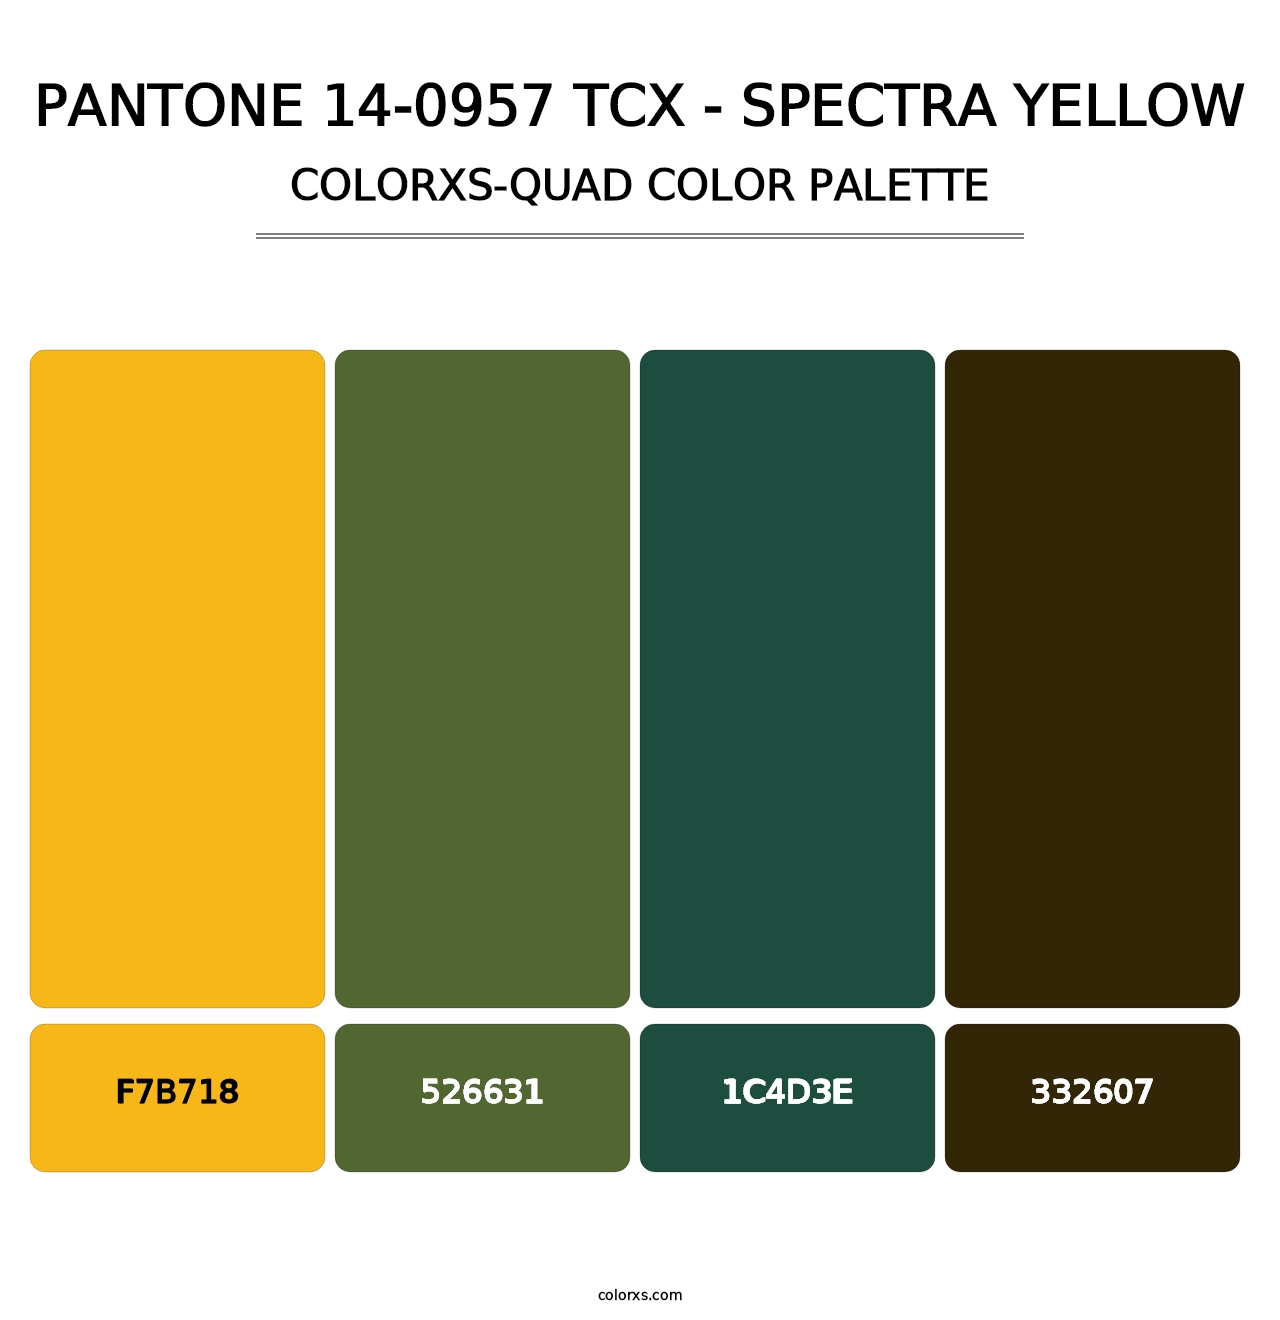 PANTONE 14-0957 TCX - Spectra Yellow - Colorxs Quad Palette